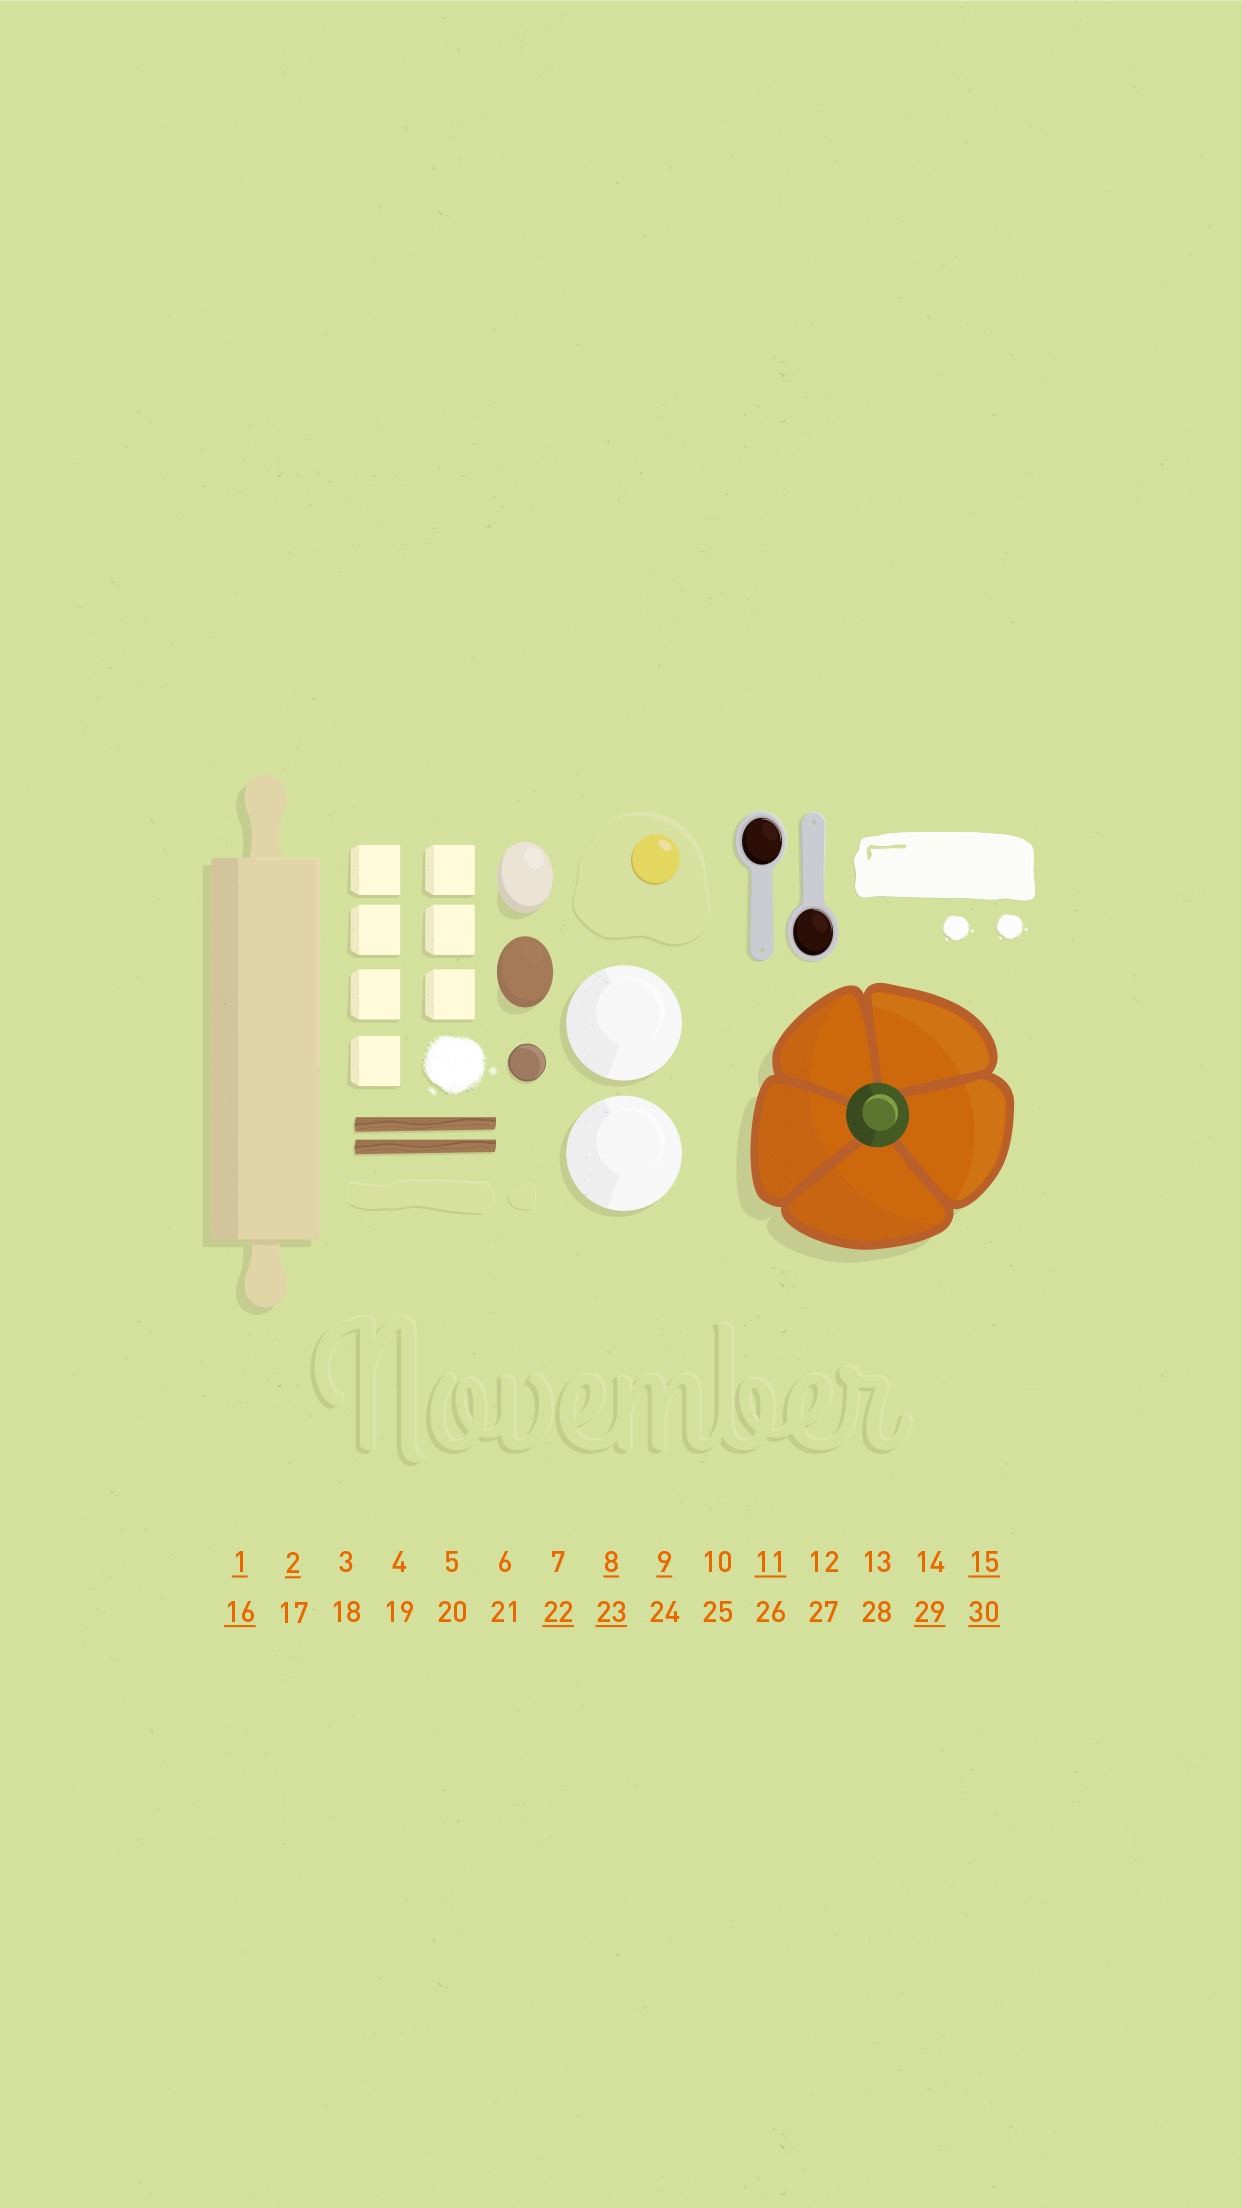 November 2014 Desktop Calendar Wallpaper